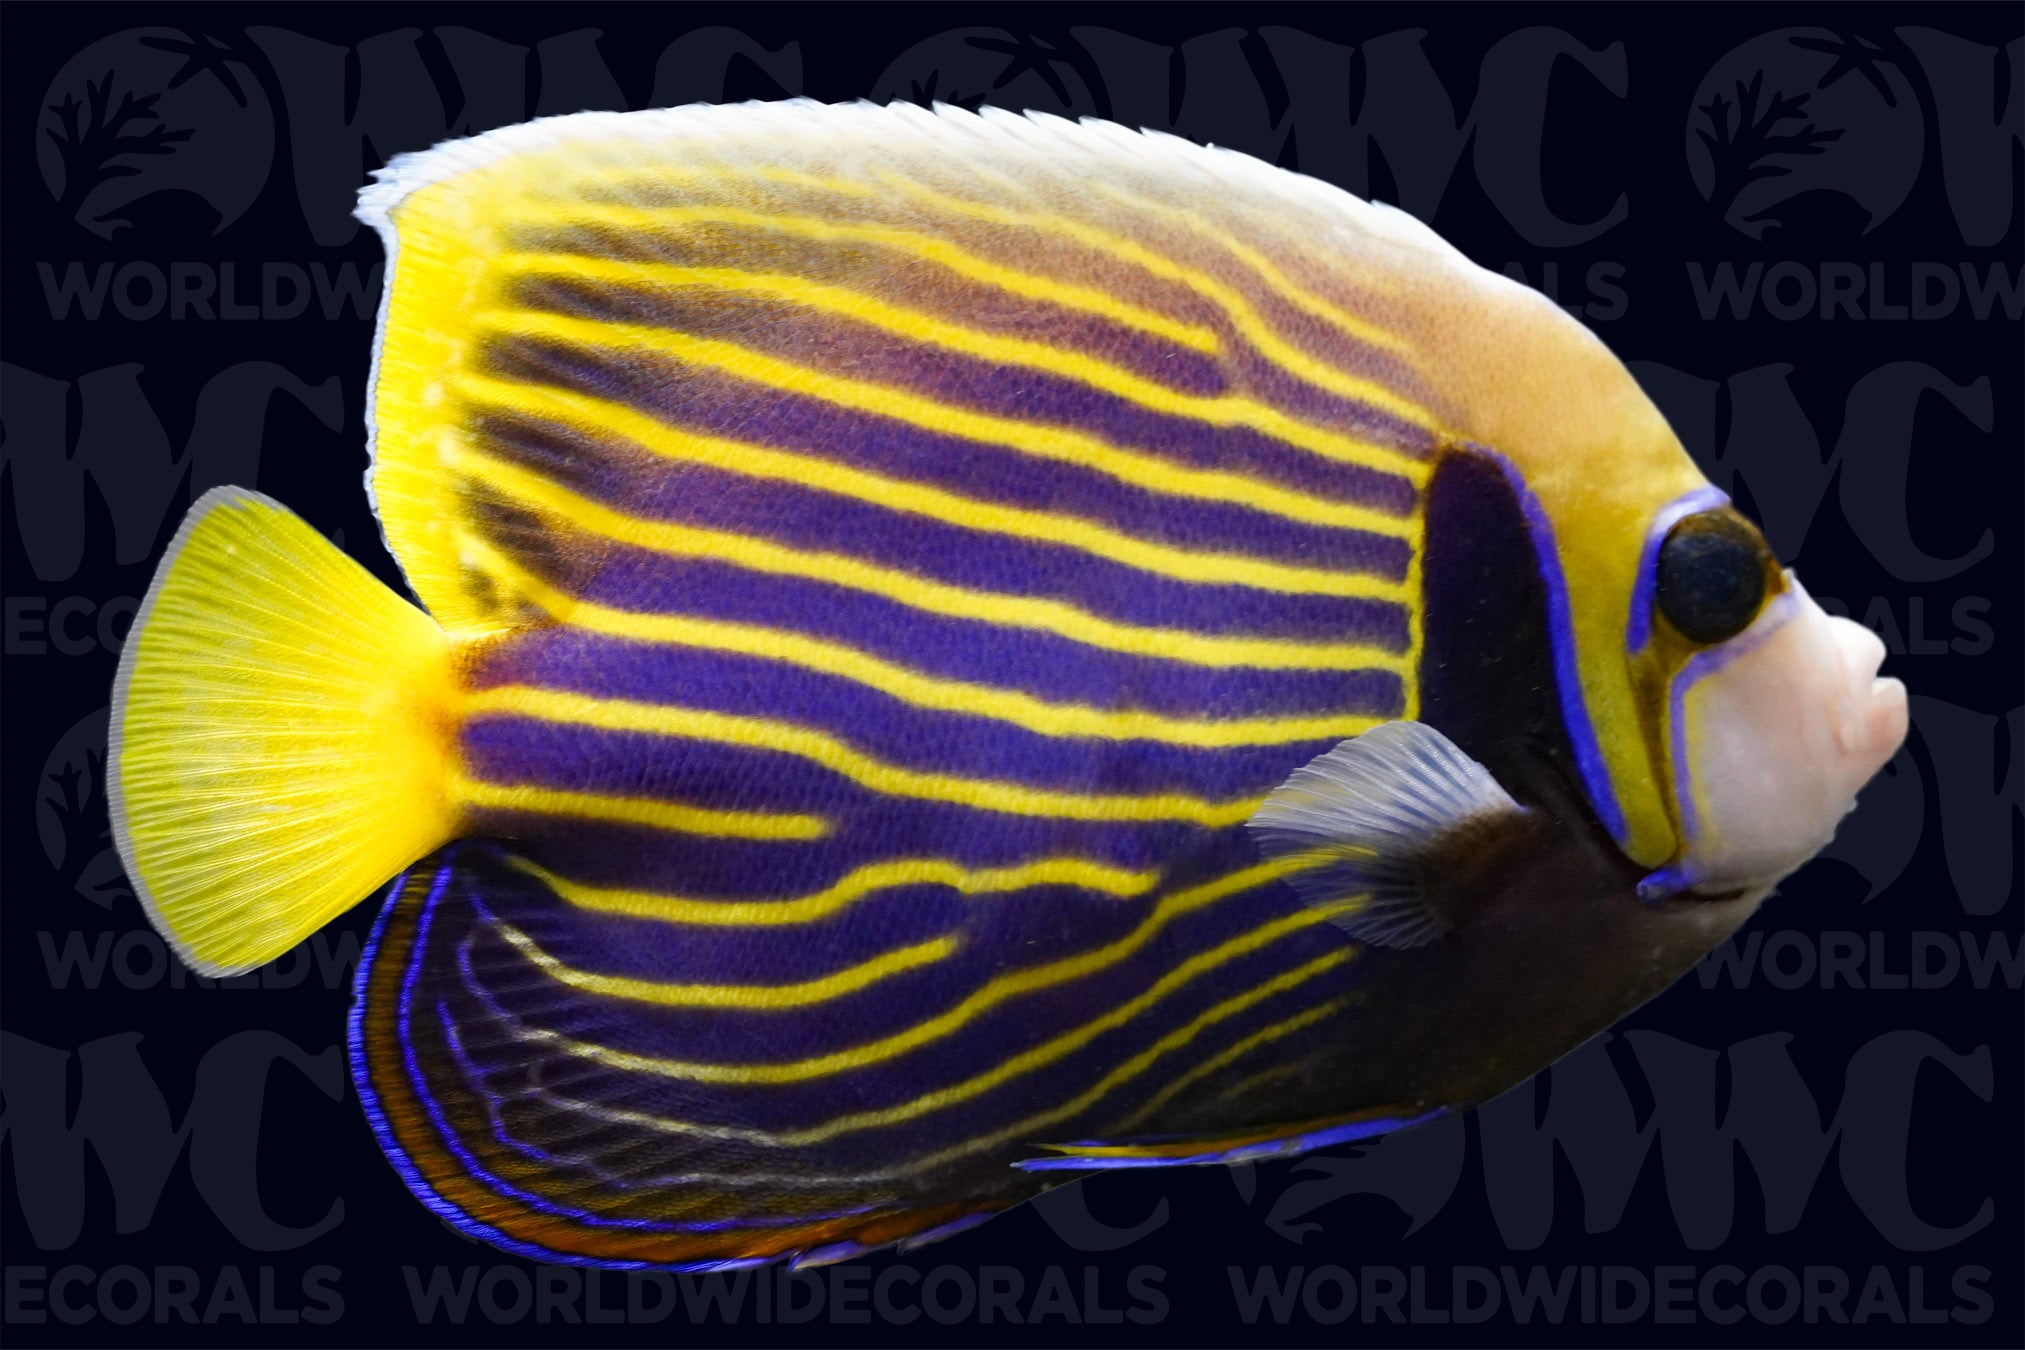 Imperator Angelfish - Philippines